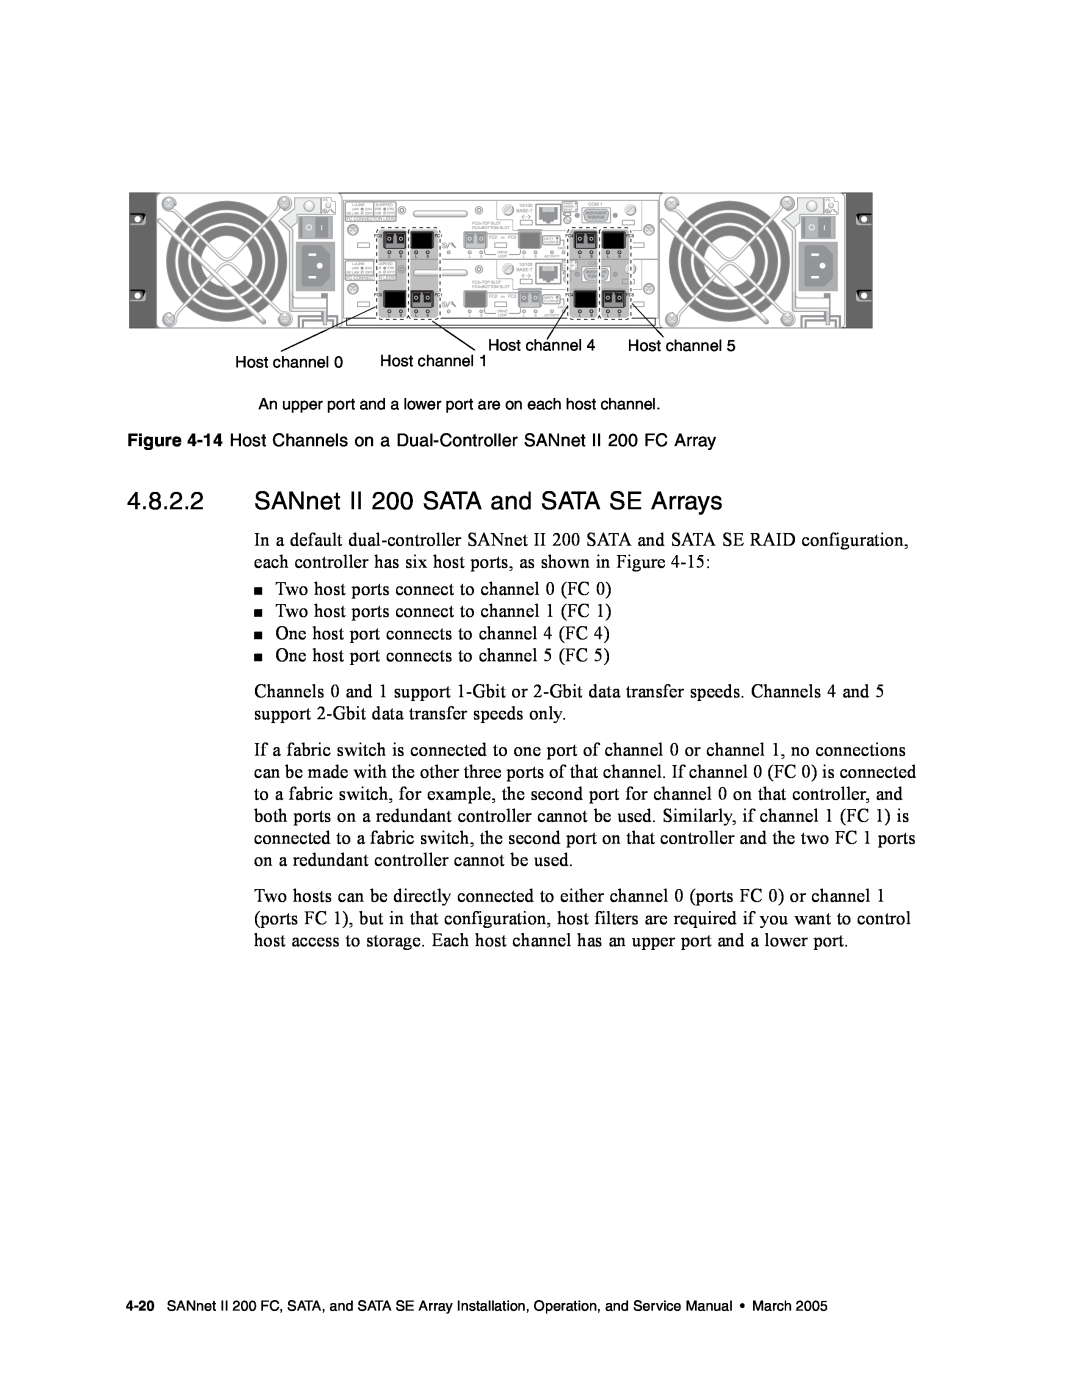 Dot Hill Systems II 200 FC service manual SANnet II 200 SATA and SATA SE Arrays 